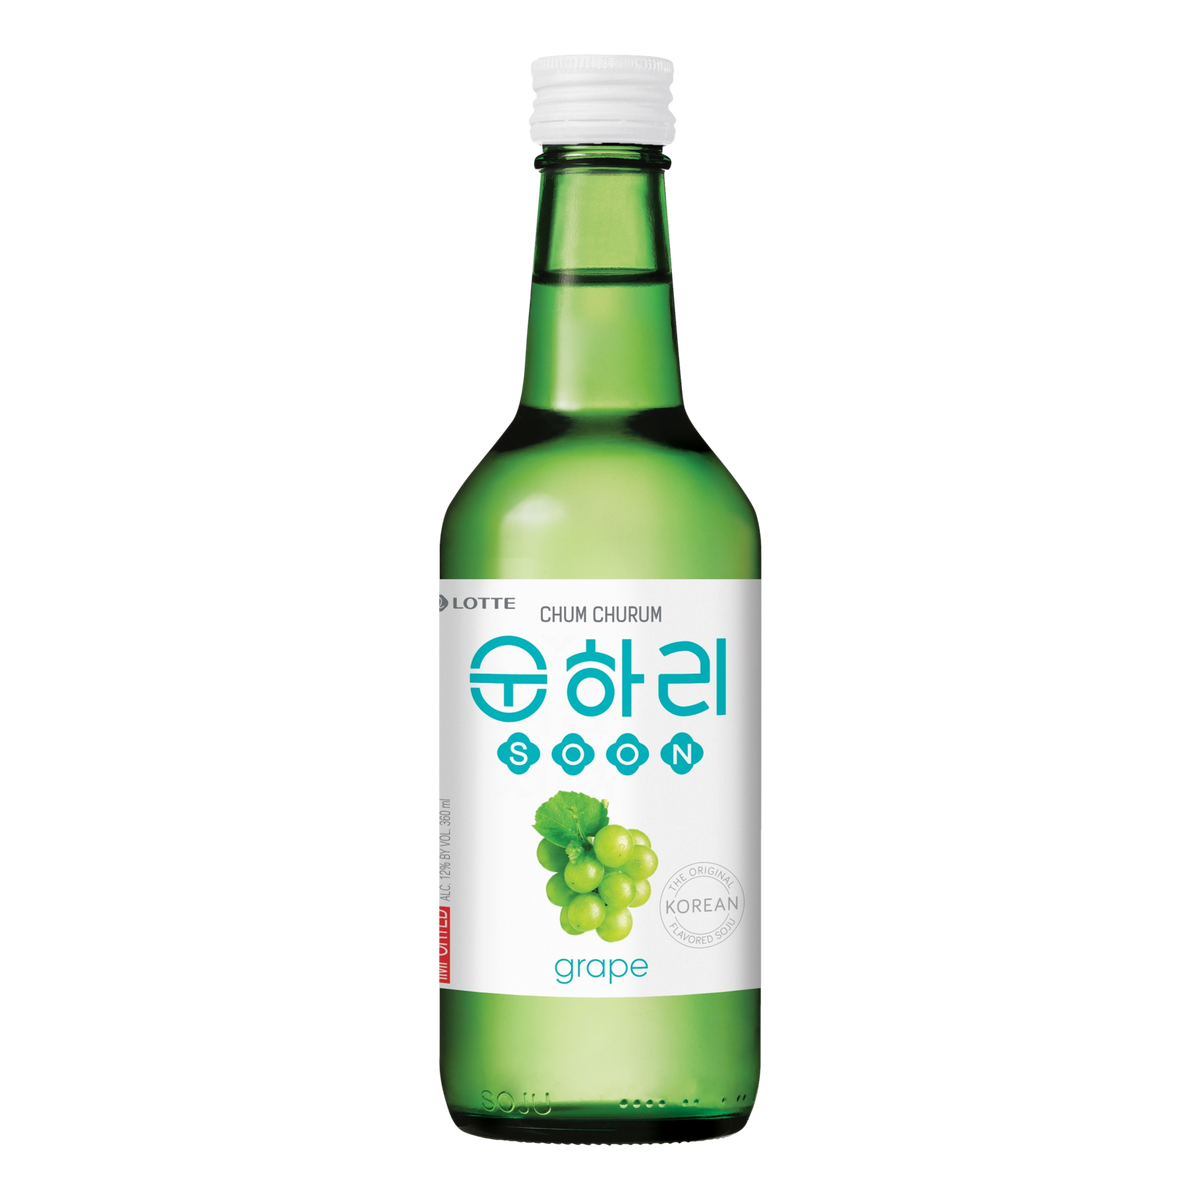 Lotte Chum Churum Grape Soju 360ml Bottle Single